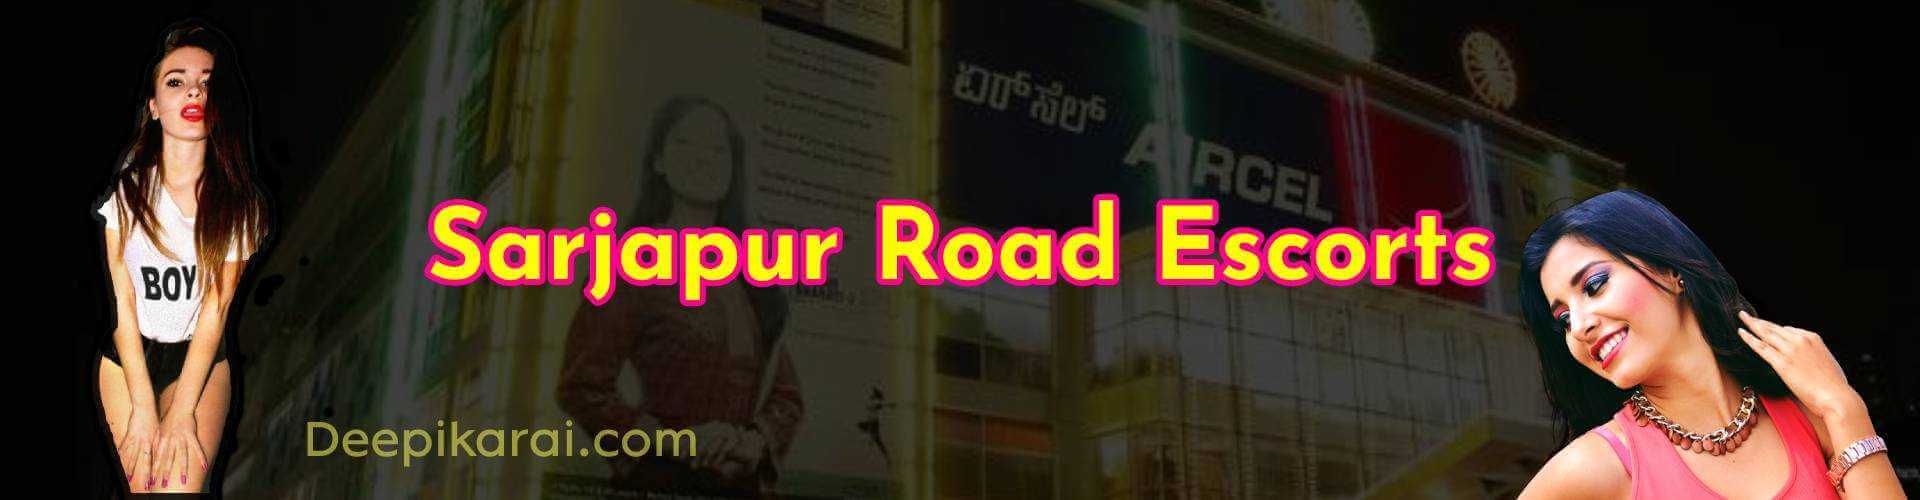 sarjapur road escorts